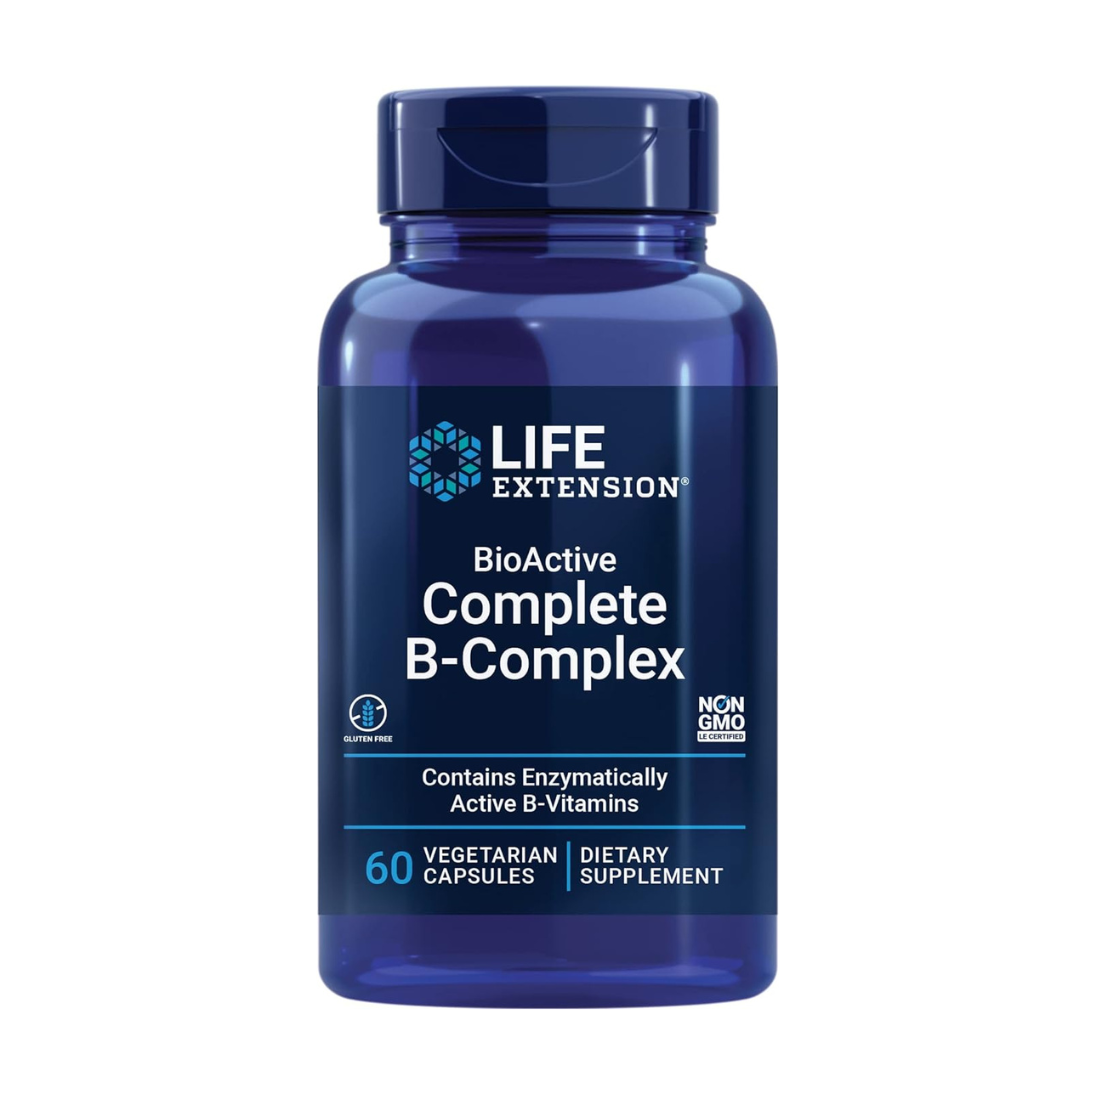 COMPLETE B-COMPLEX